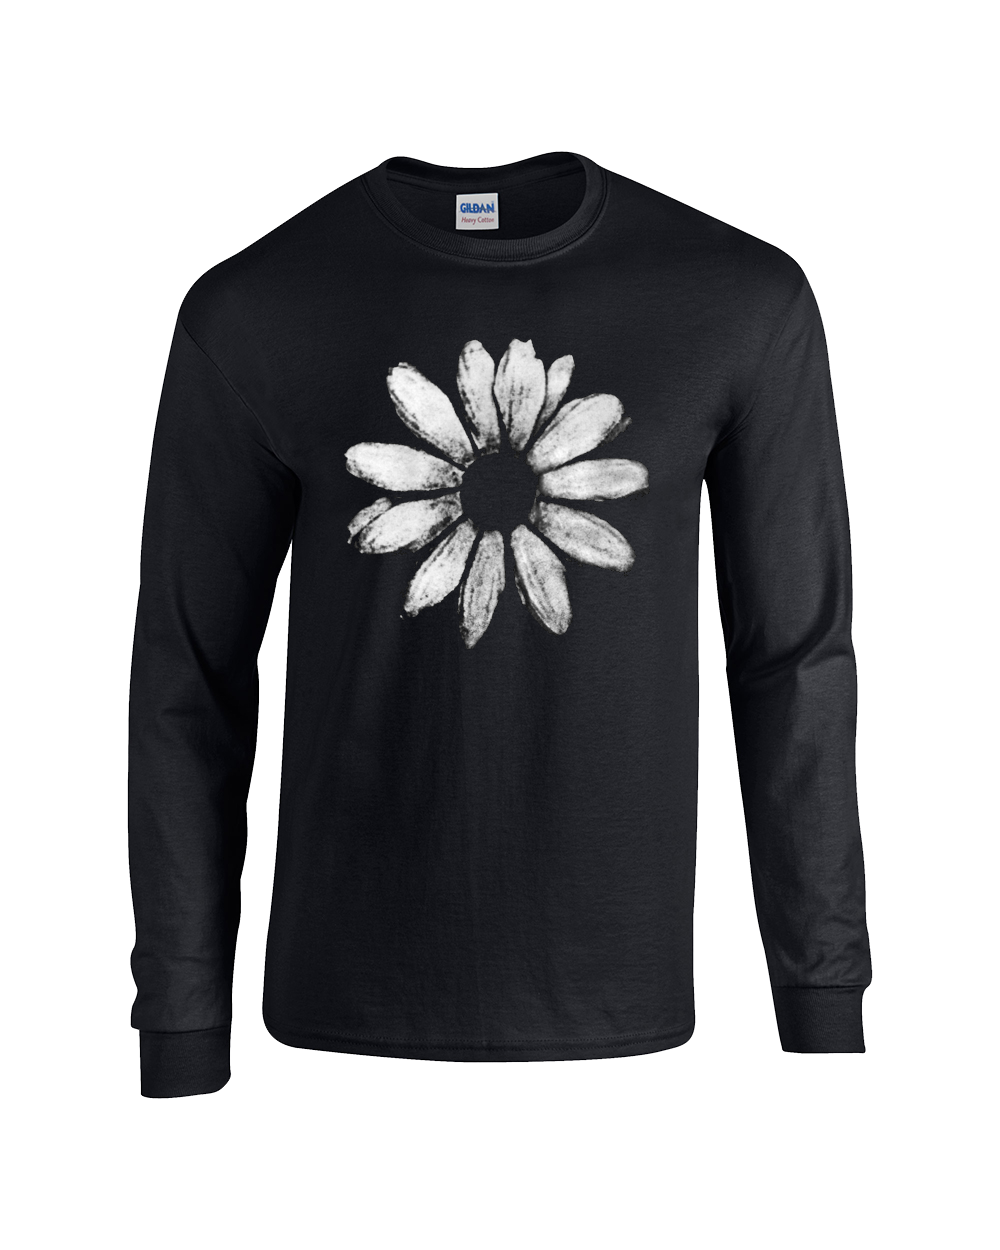 Daisy T-Shirt, Black, Long Sleeve with ABC back print